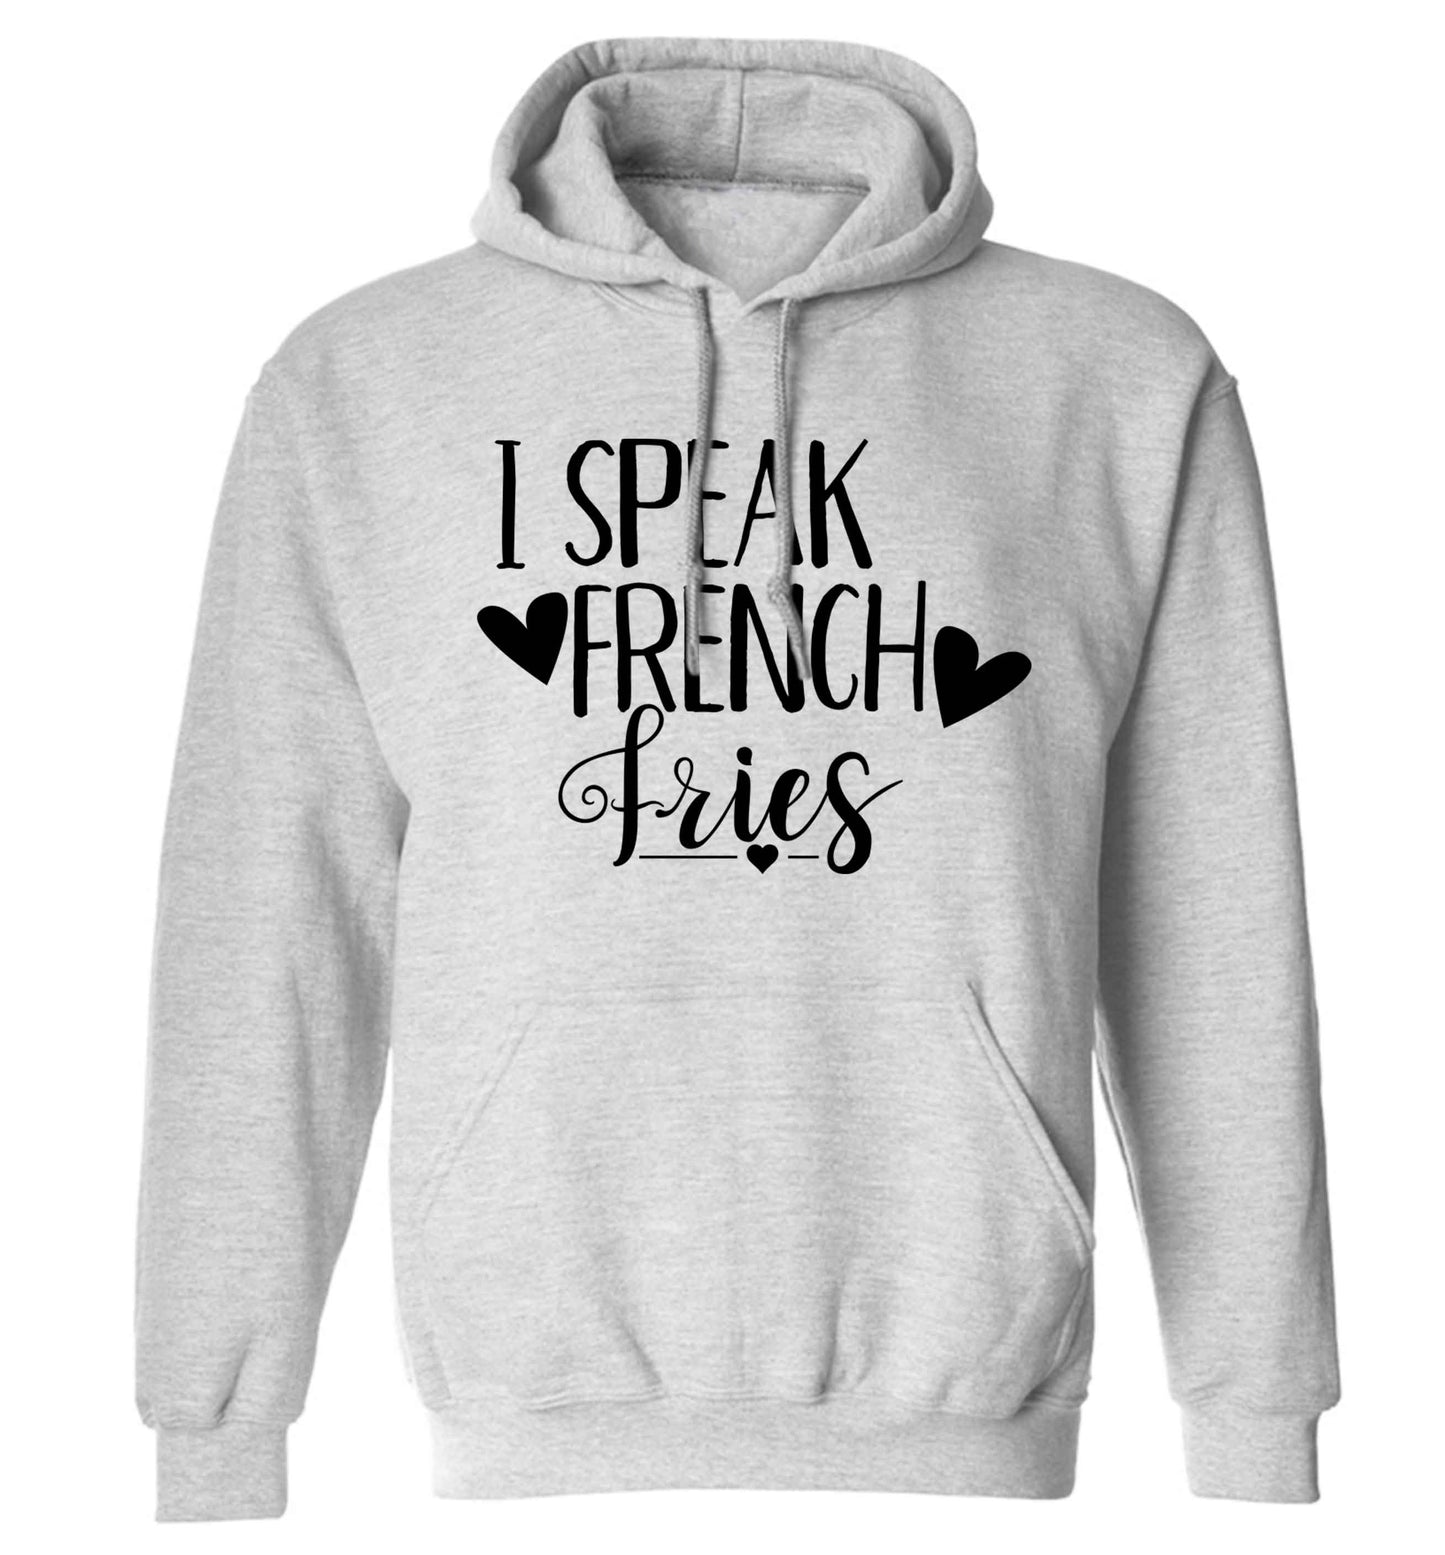 I speak French fries adults unisex grey hoodie 2XL